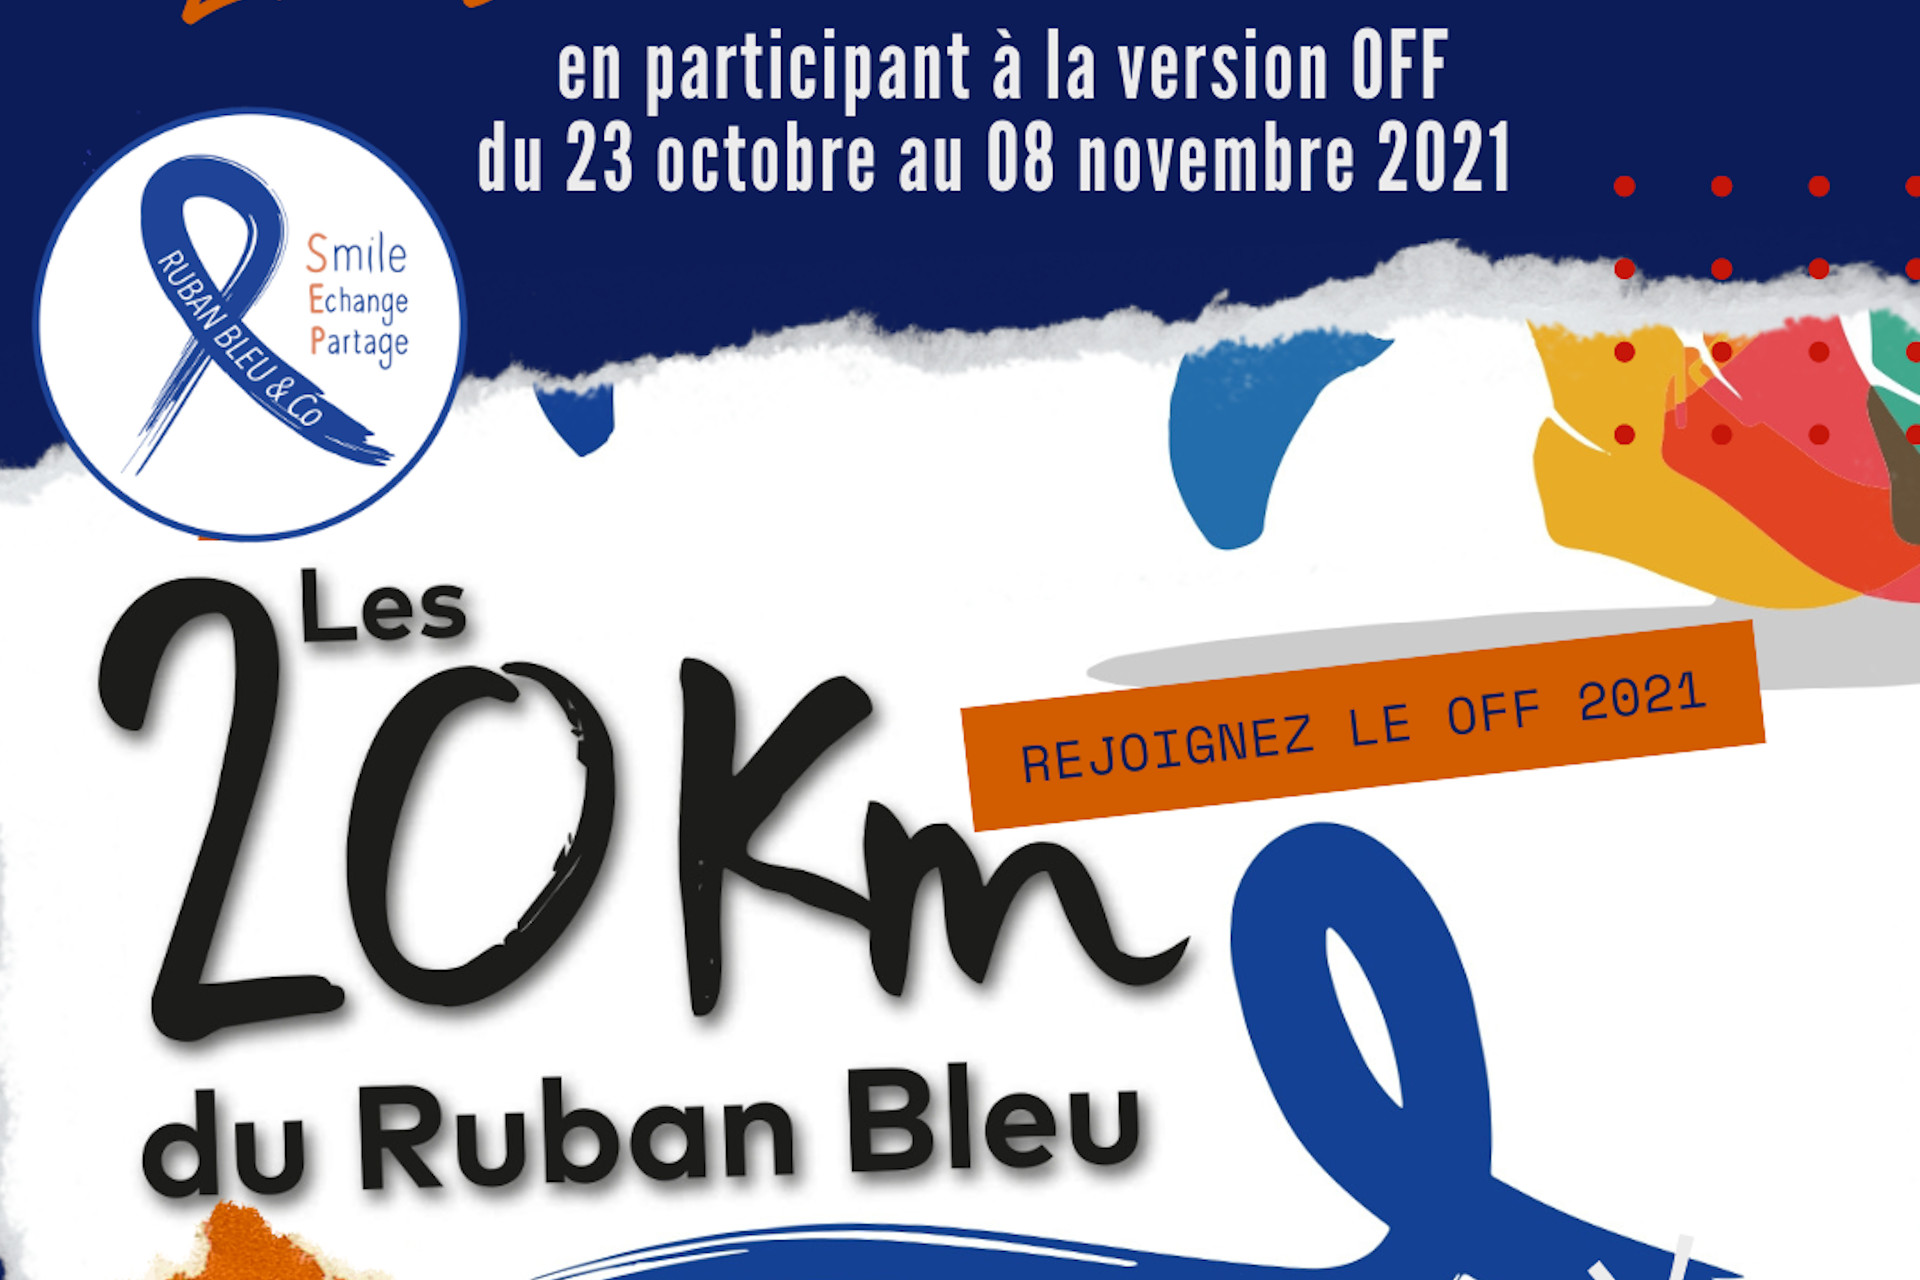 Les 20km Du Ruban Bleu Course Off Ruban Bleu And Co 